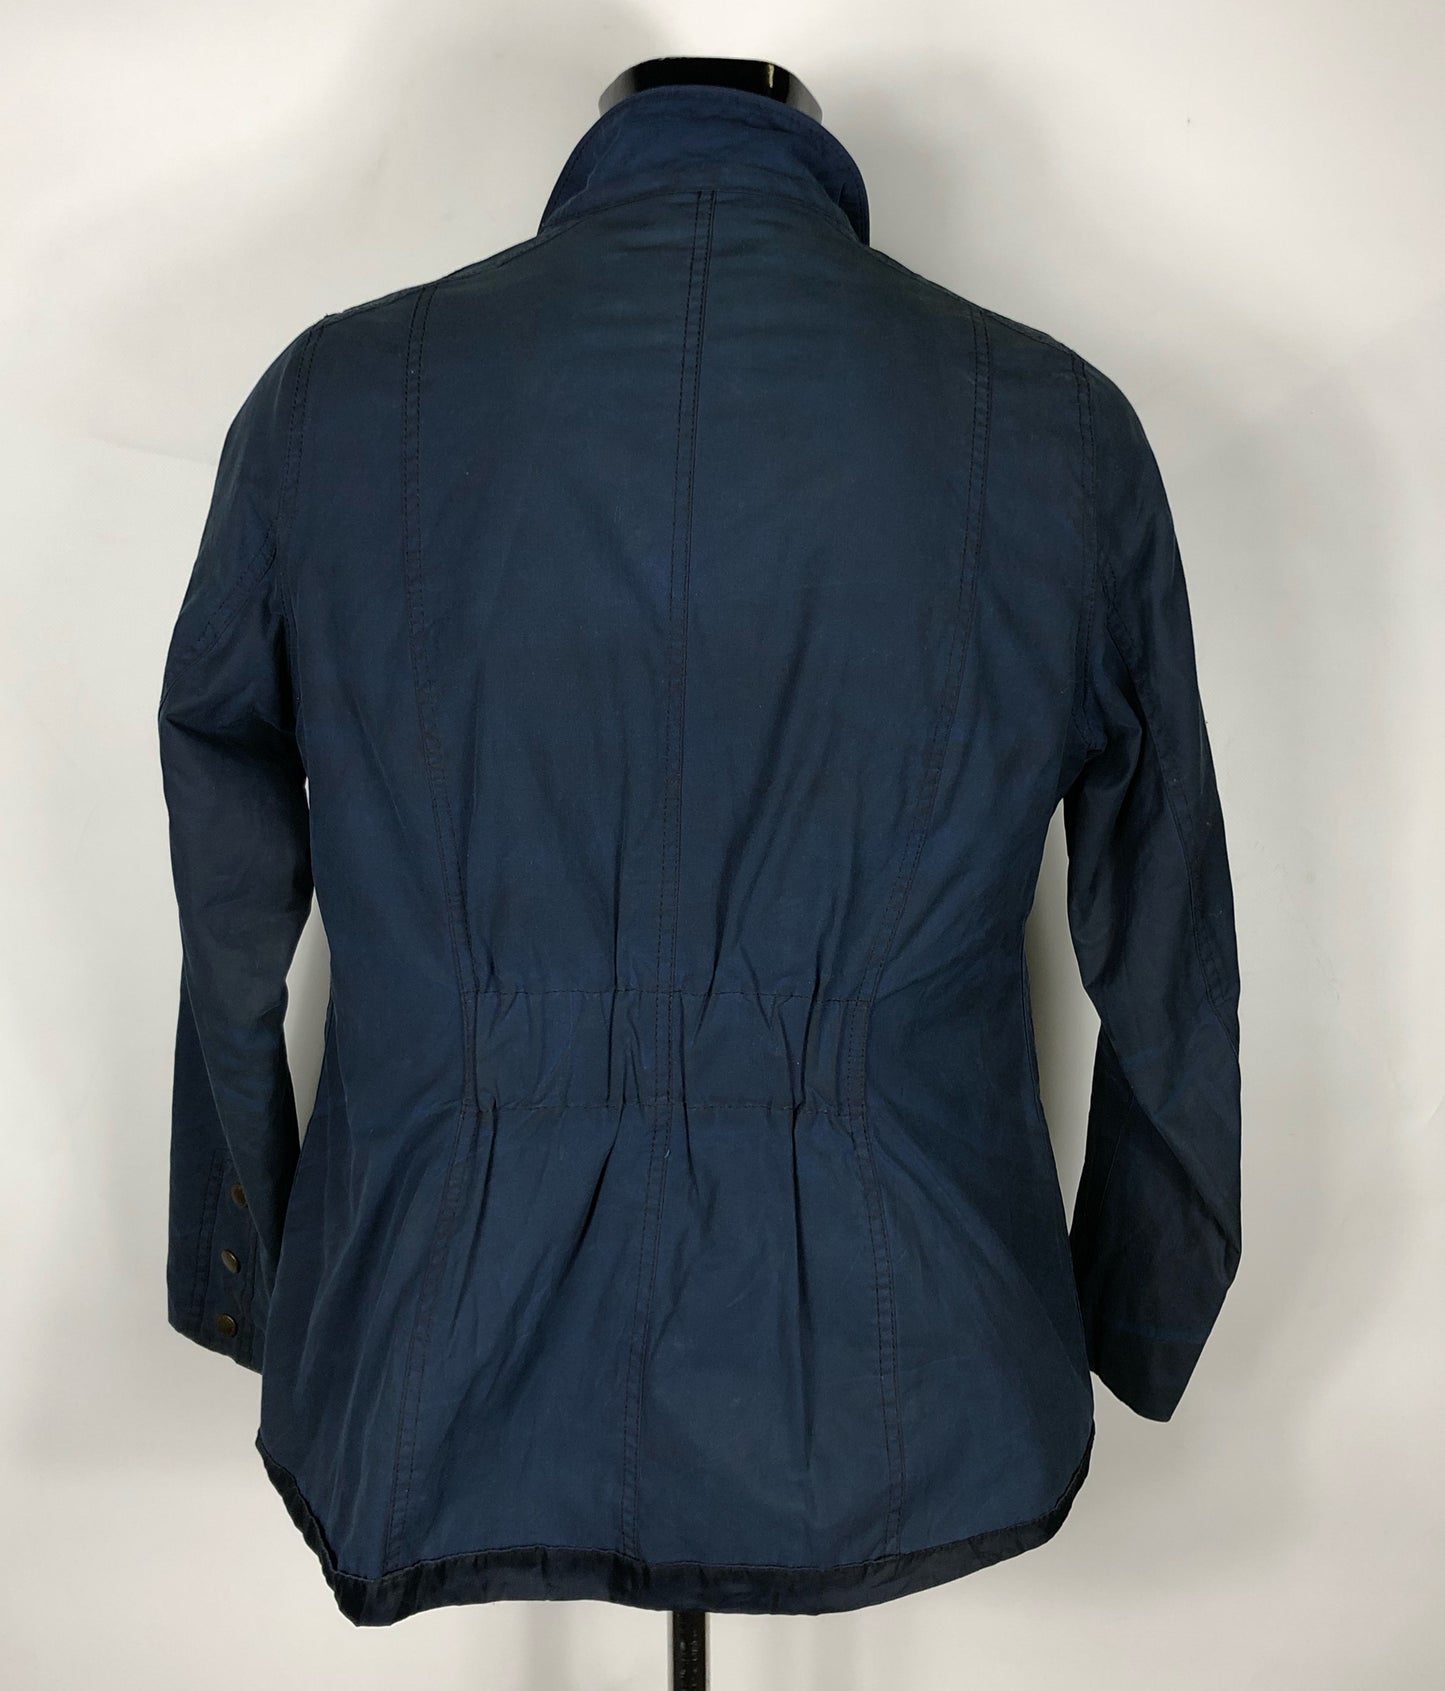 Giacca Barbour Donna Blu Cerata tg.46 Navy Winter Ferndown waxed jacket UK16